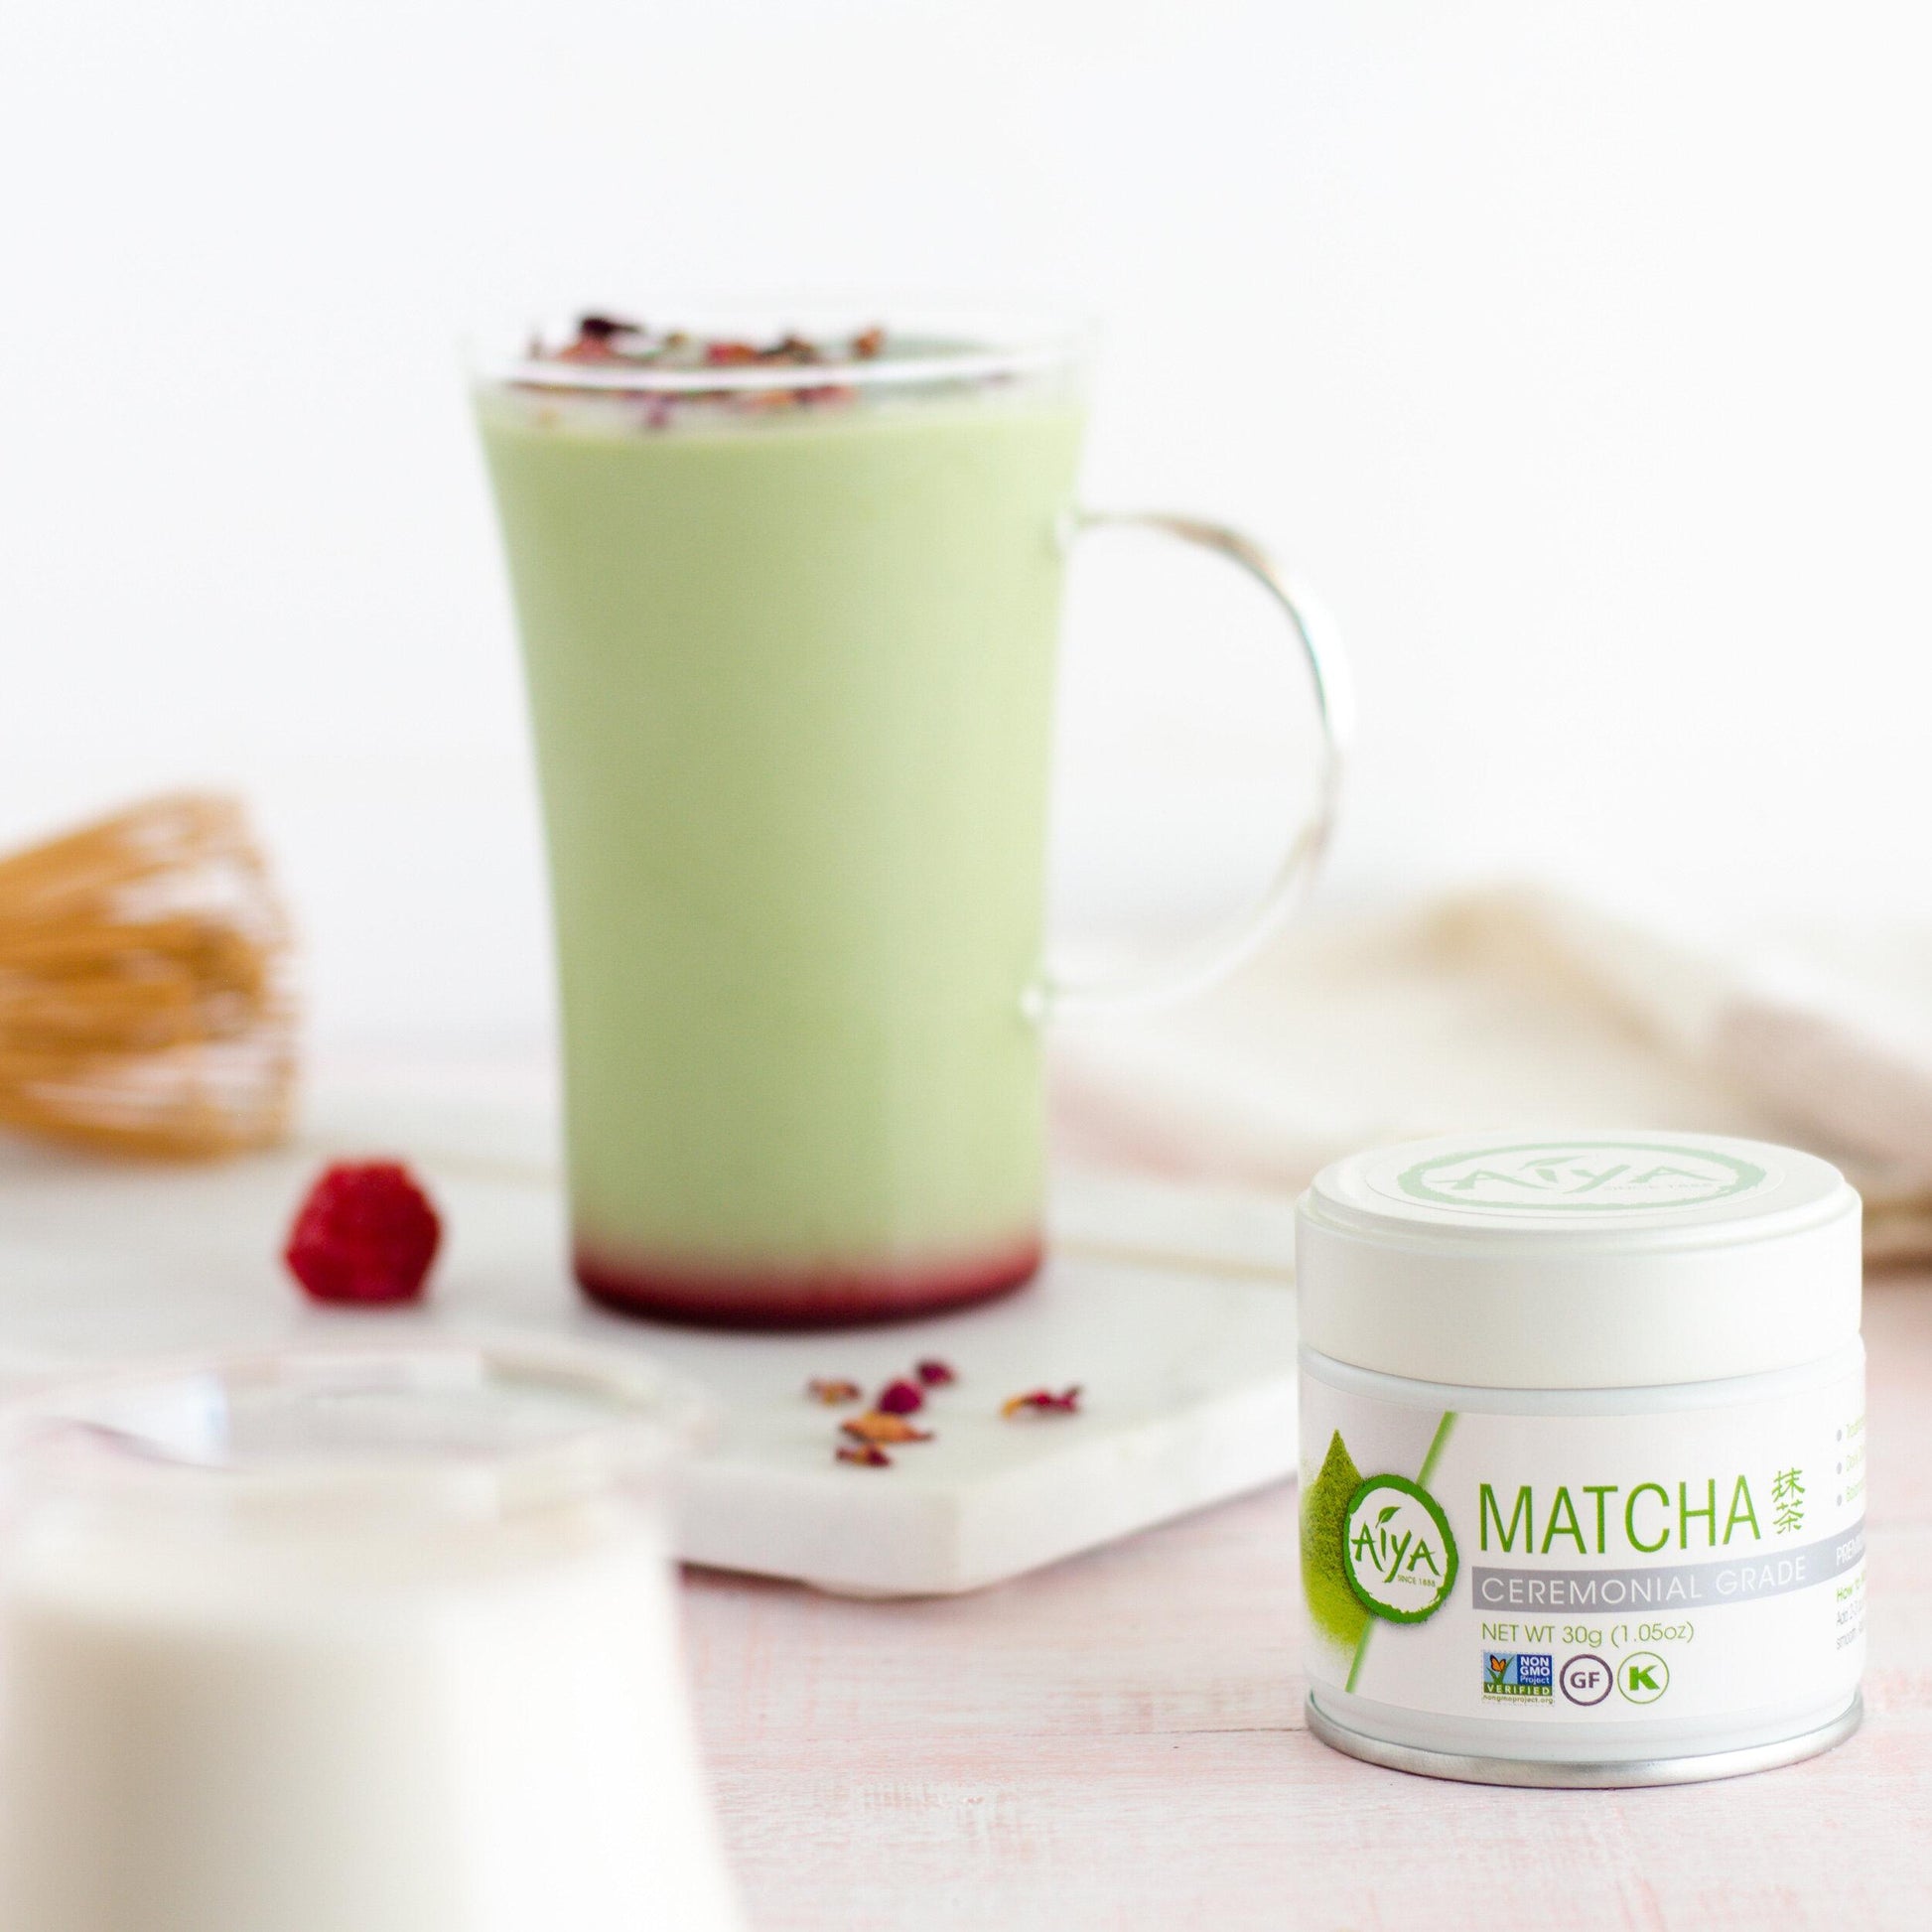 30gx3SET Japanese Organic Matcha【 Ceremonial Grade】 Matcha Green Tea Powder  BI